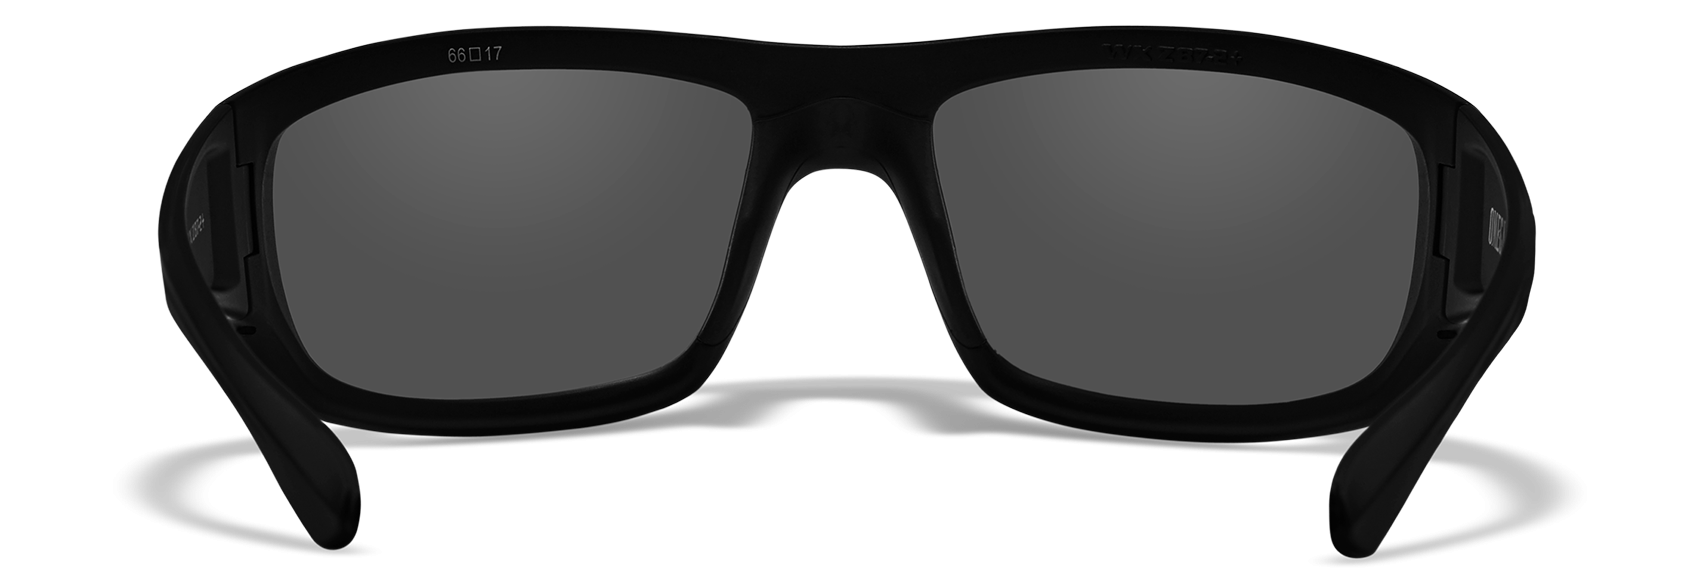 Wiley X Omega Sunglasses, 4 colors